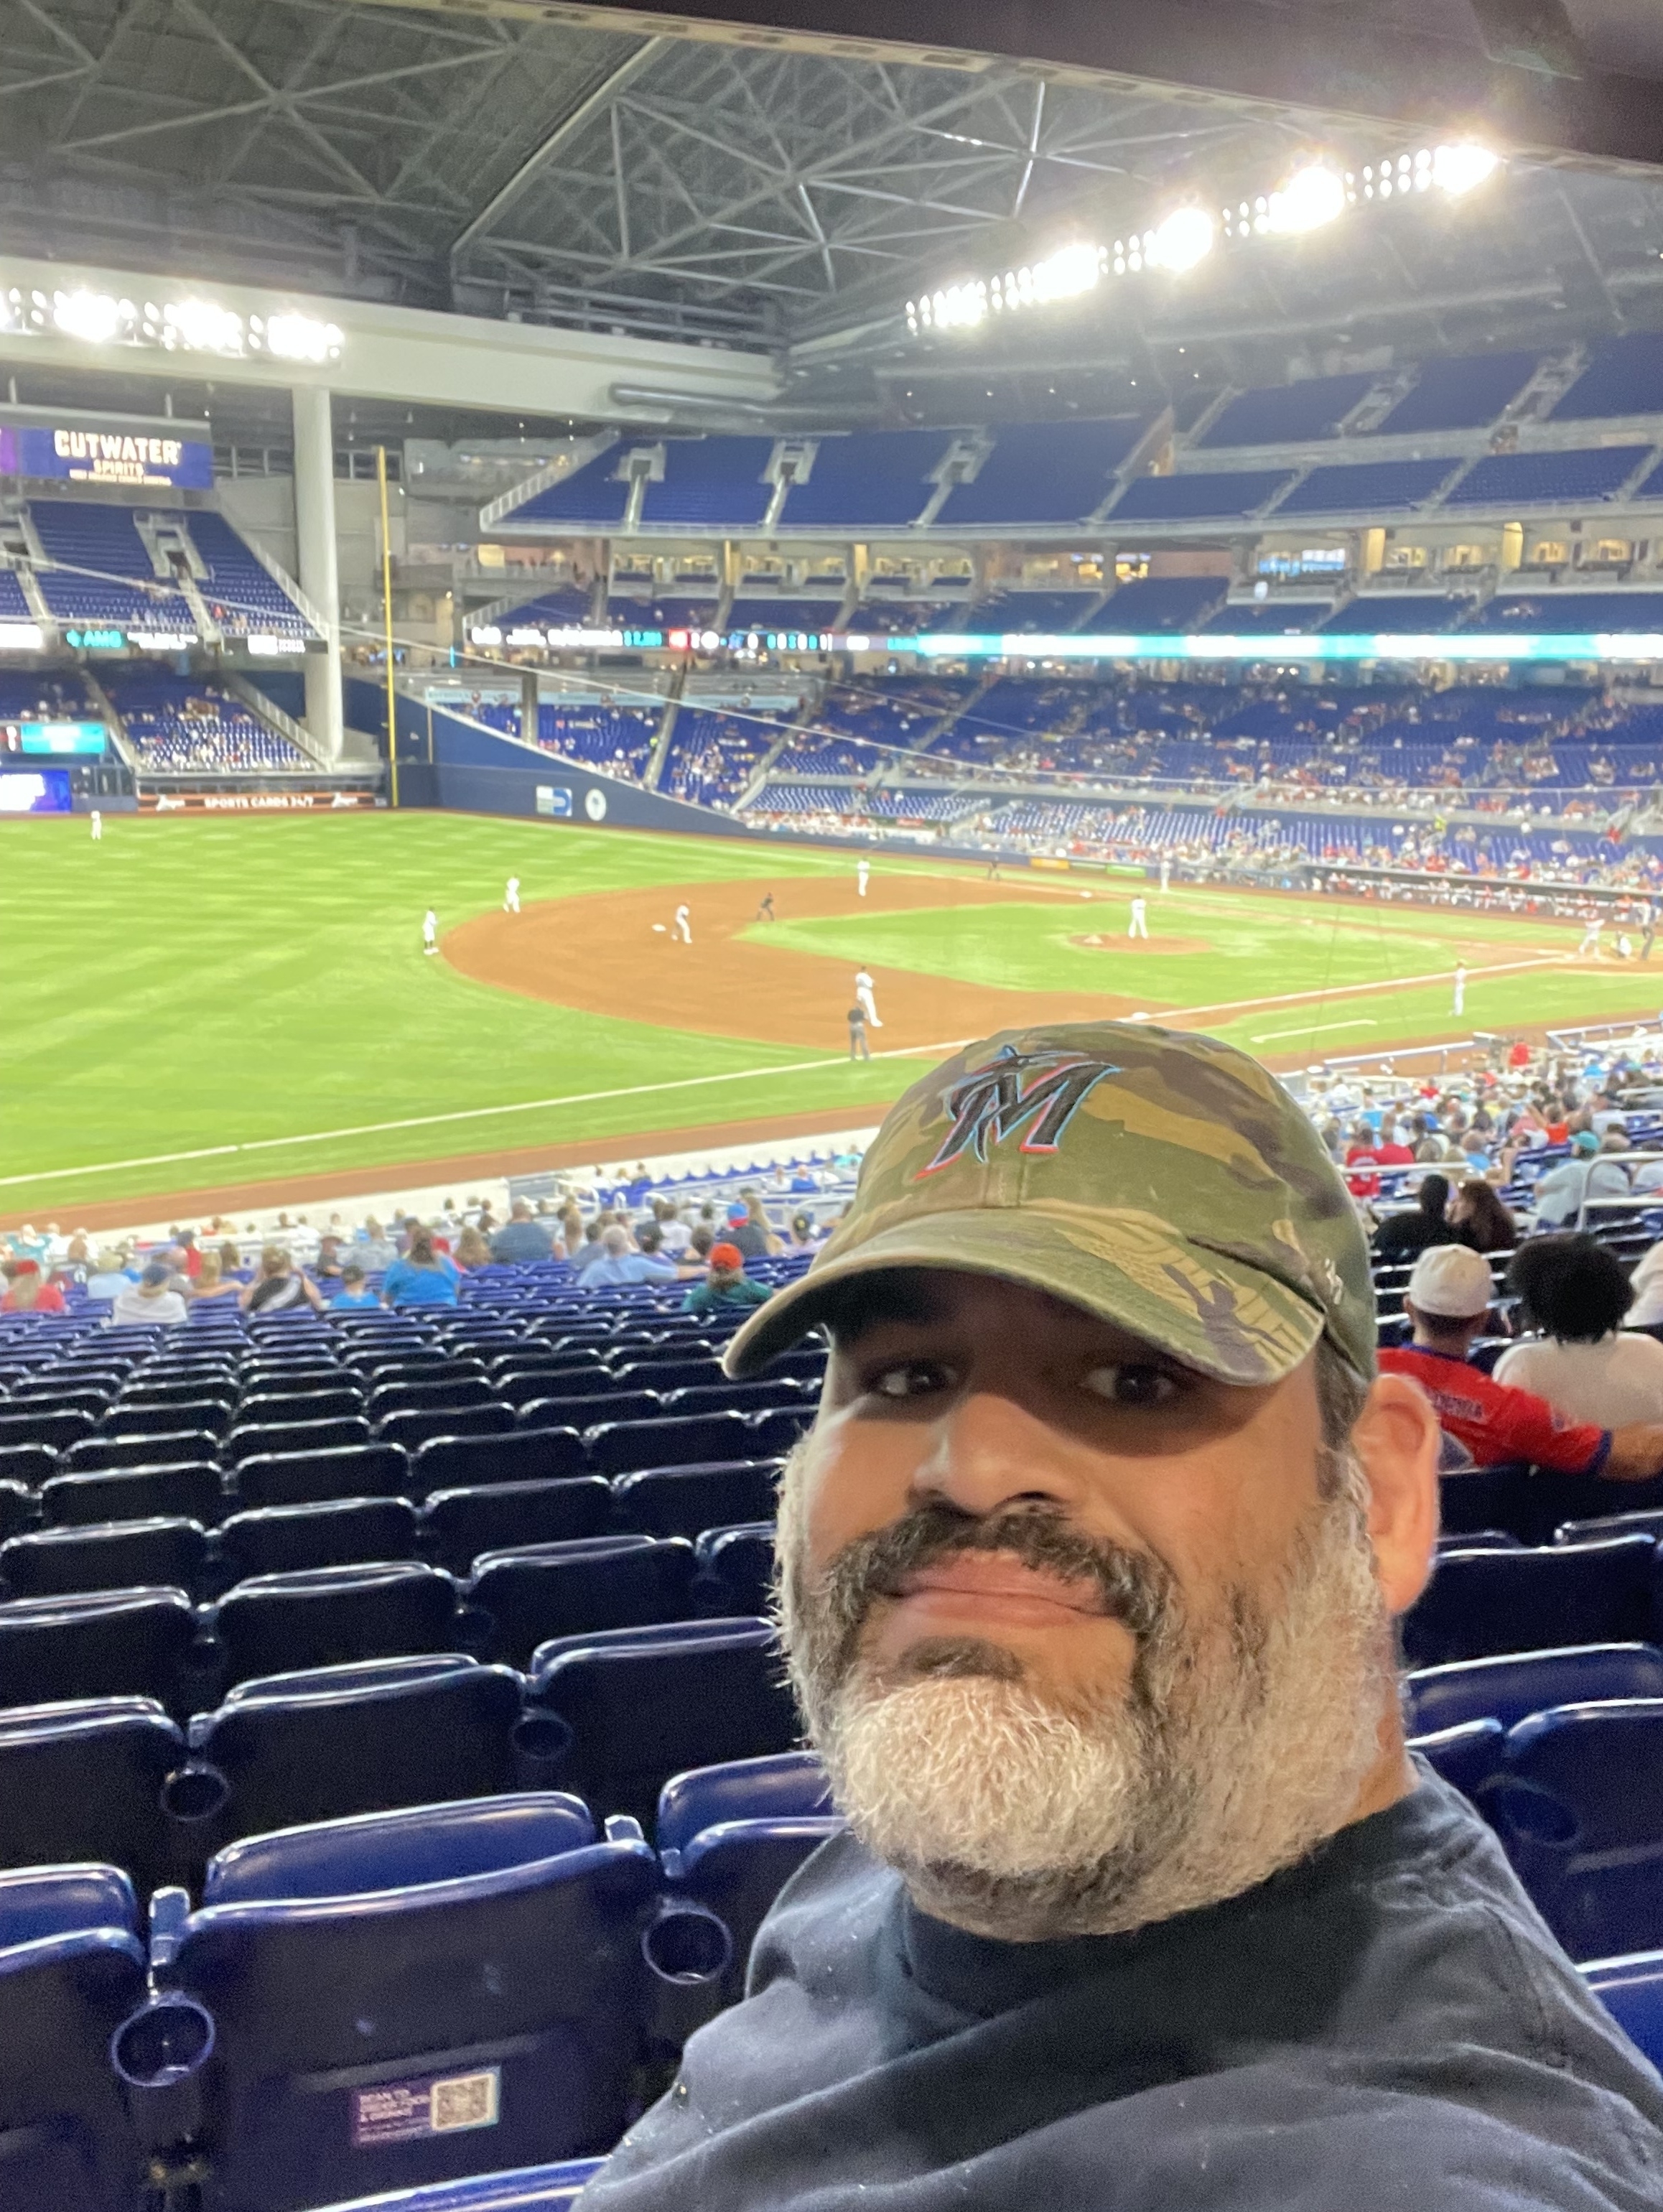 Miami Marlins - MLB vs Cincinnati Reds